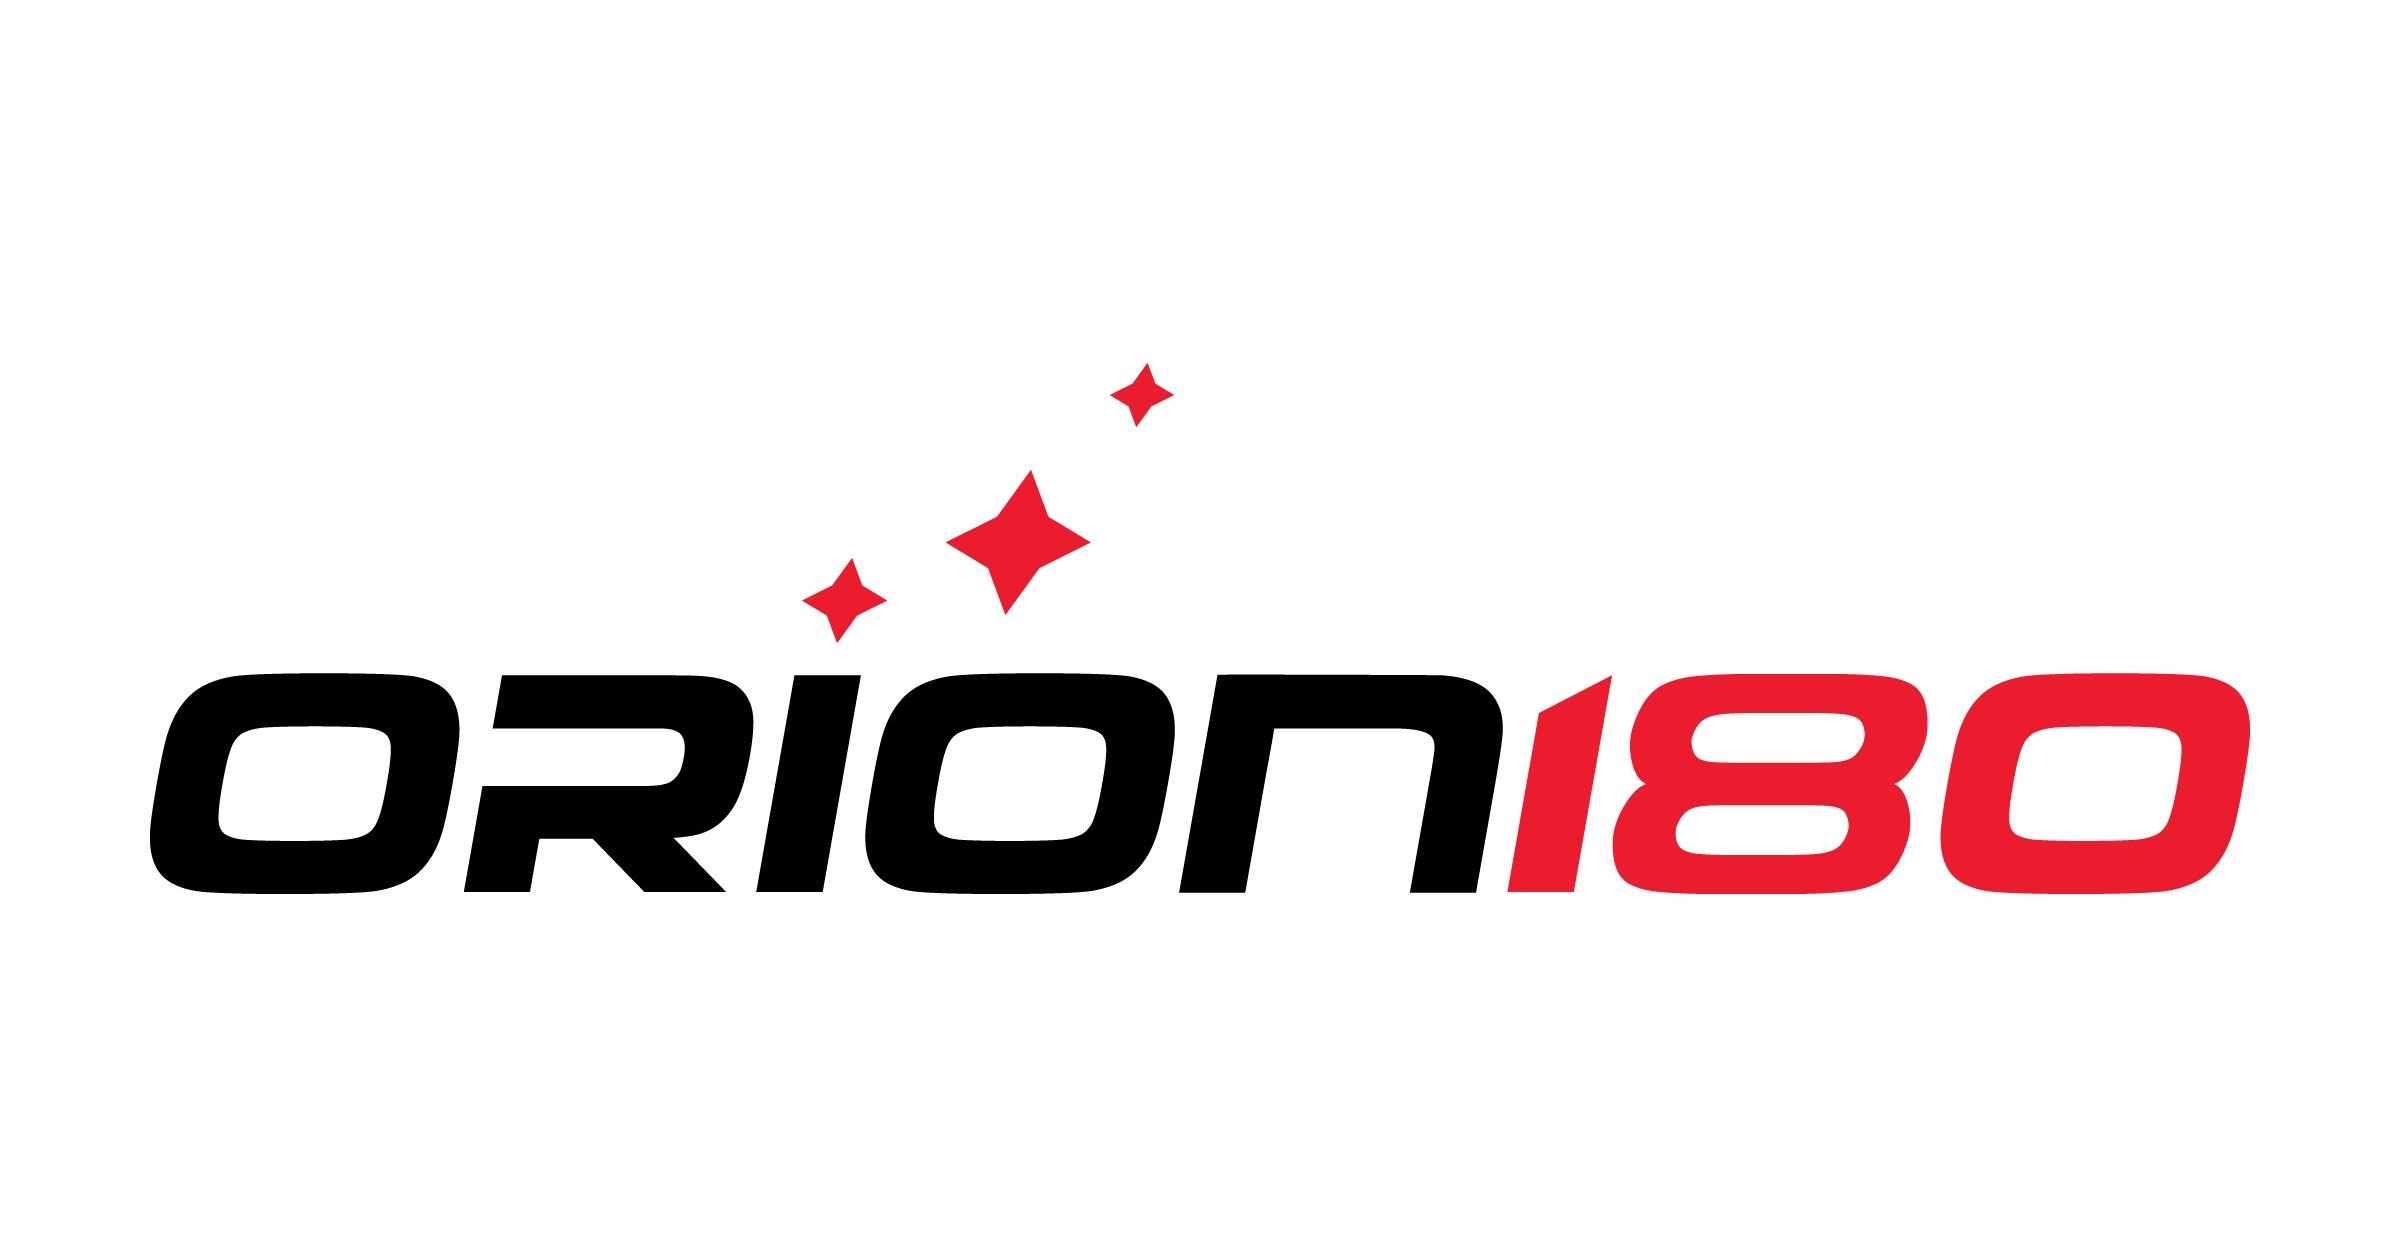 Orion180 Logo